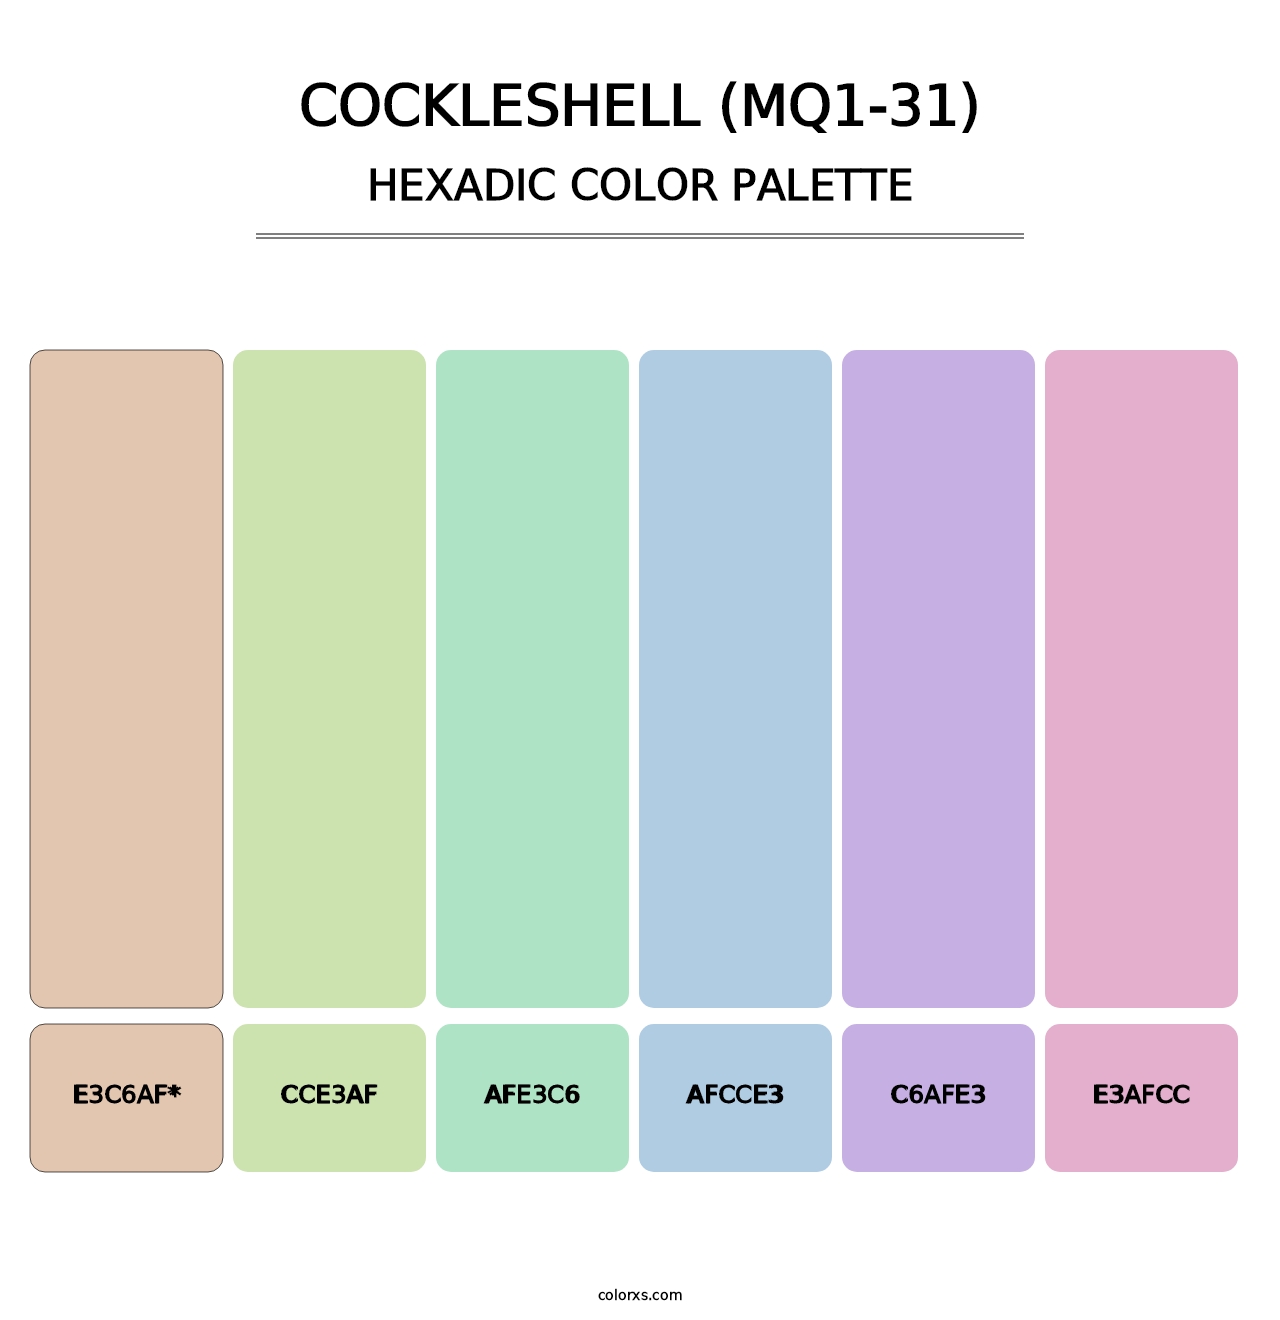 Cockleshell (MQ1-31) - Hexadic Color Palette